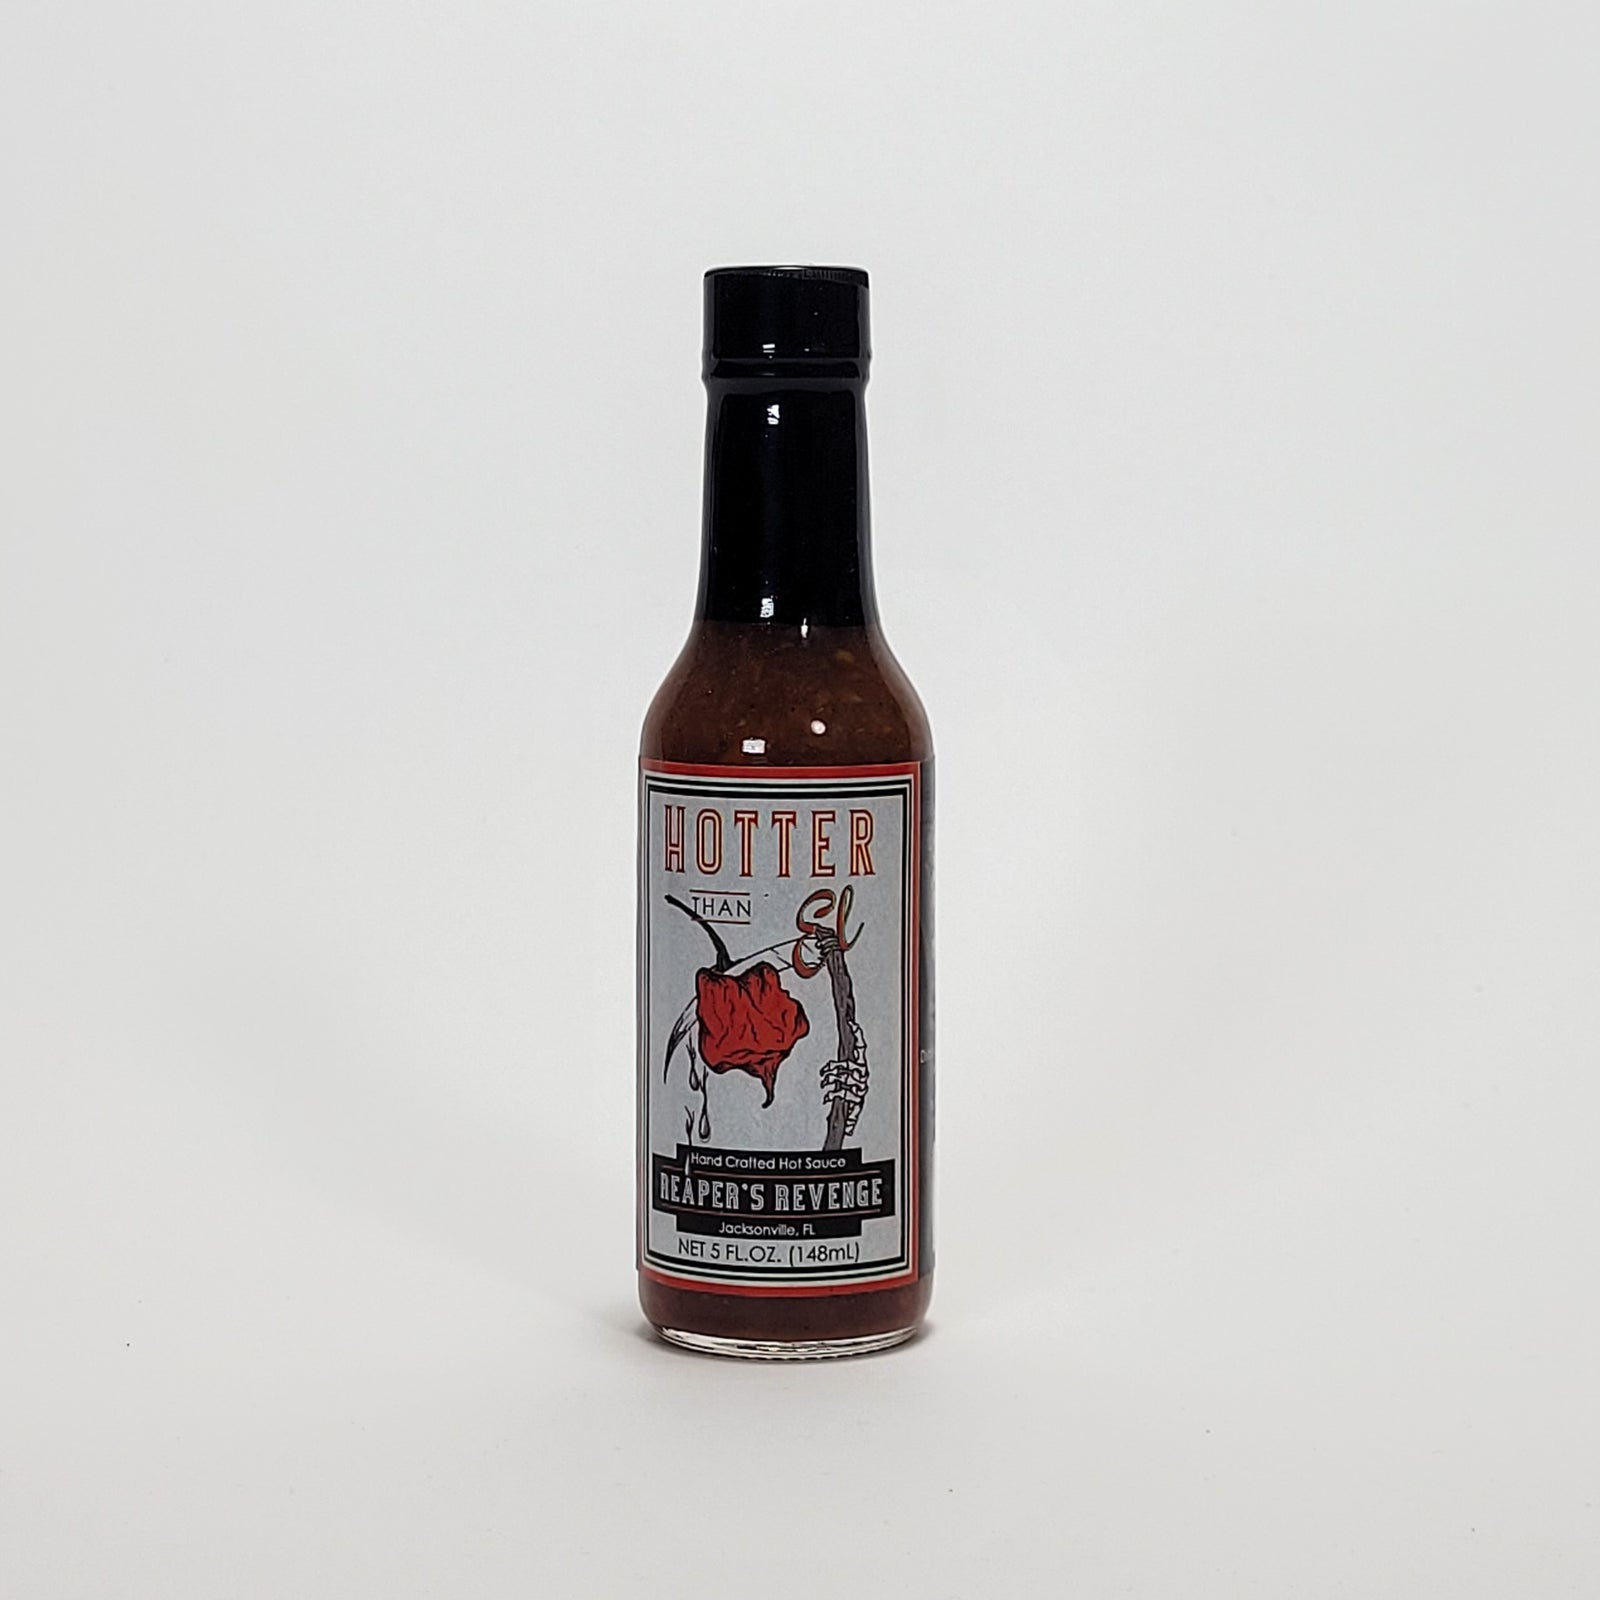 Louisiana Hot Sauce, Hotter - 6 fl oz